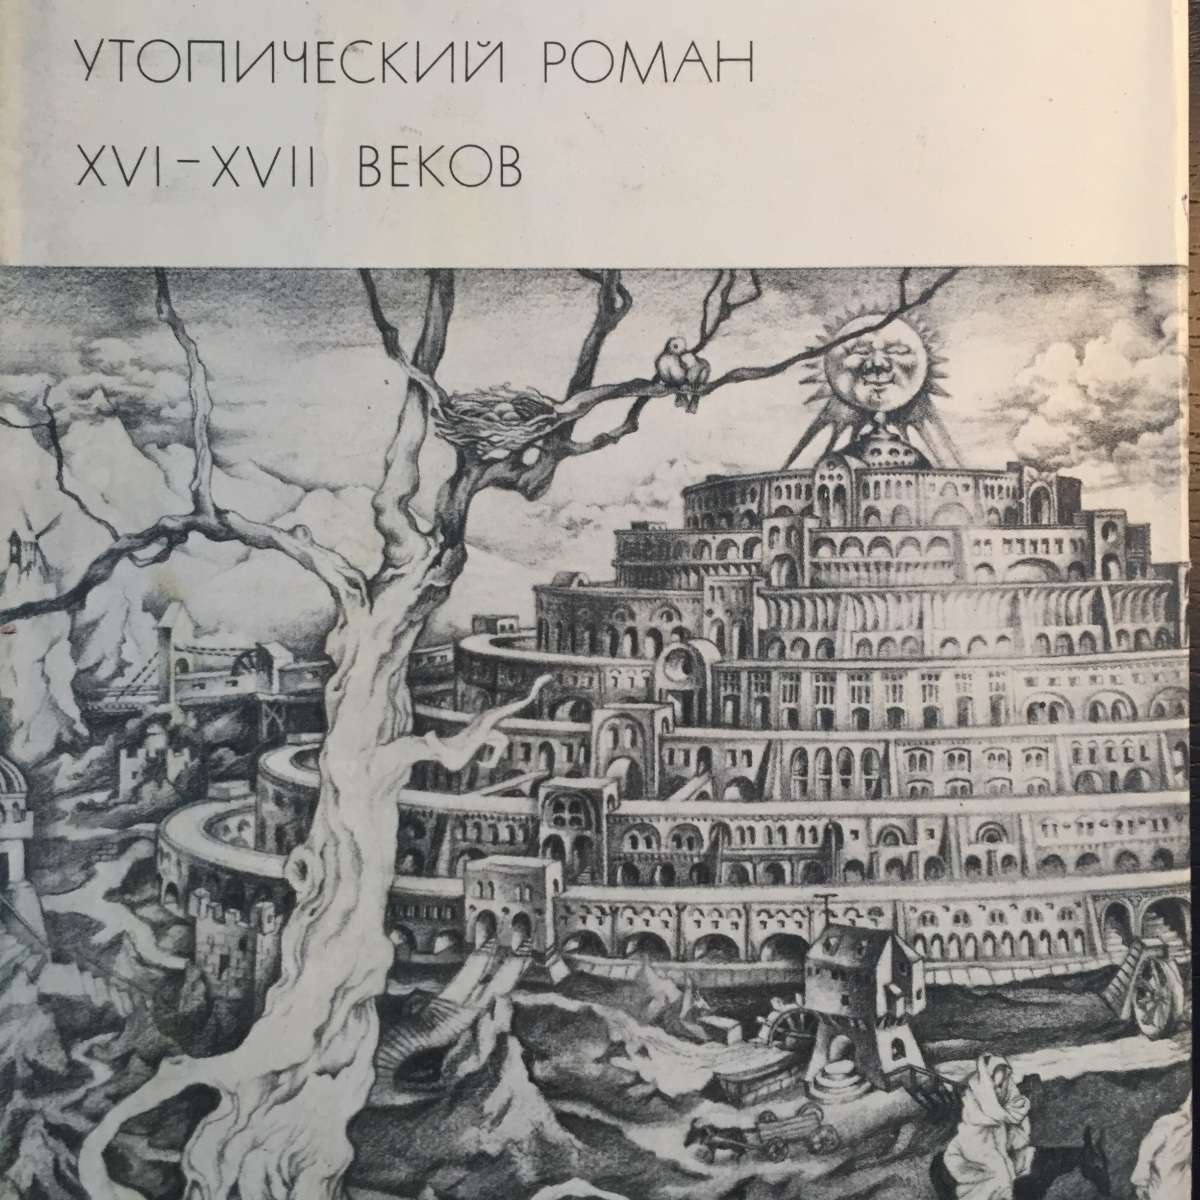 Утопический Роман XVI - XVII веков